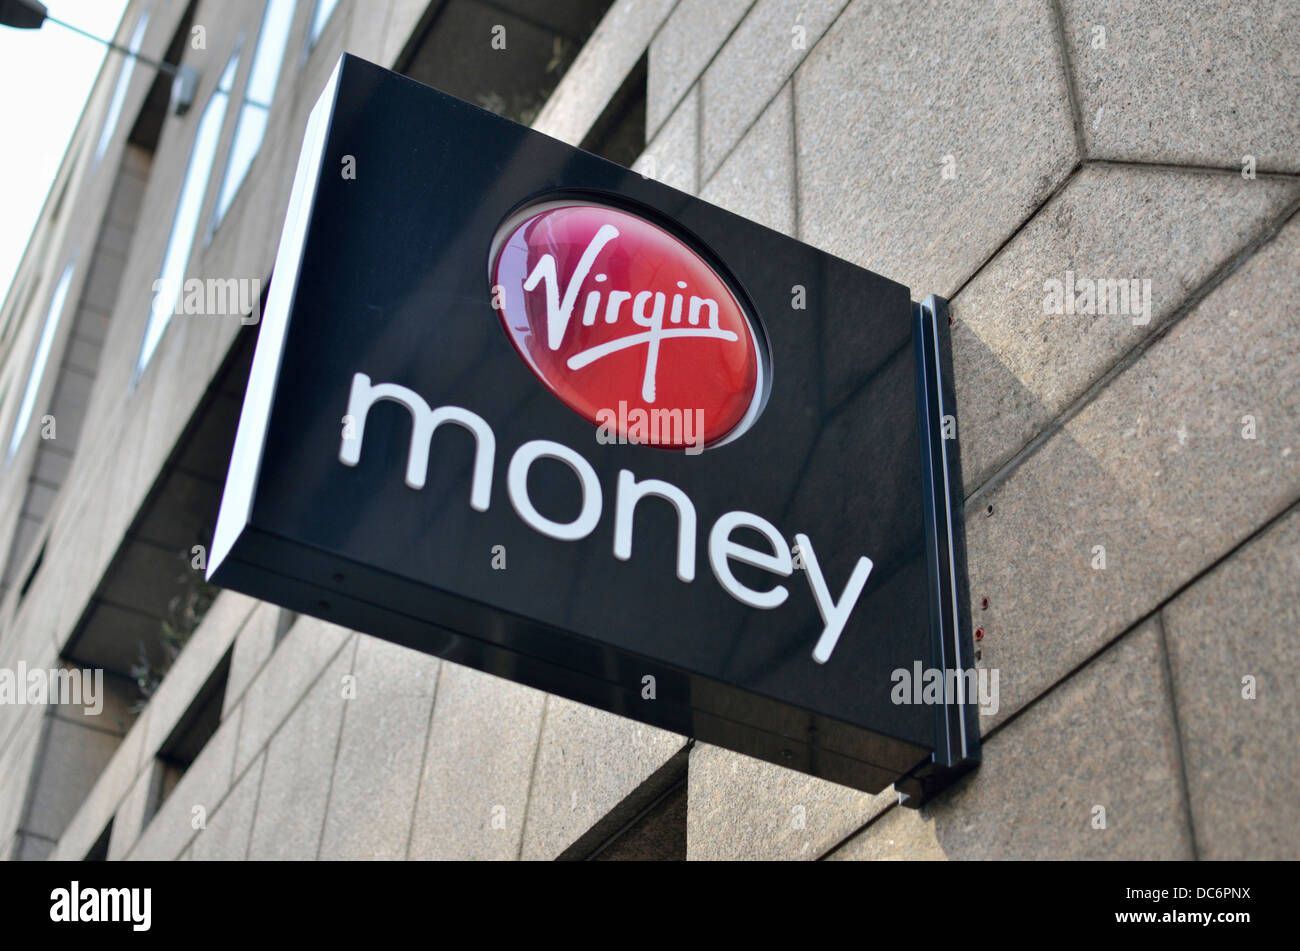 Virgin Money bank branch in Moorgate, City of London, London, UK. Stock Photo